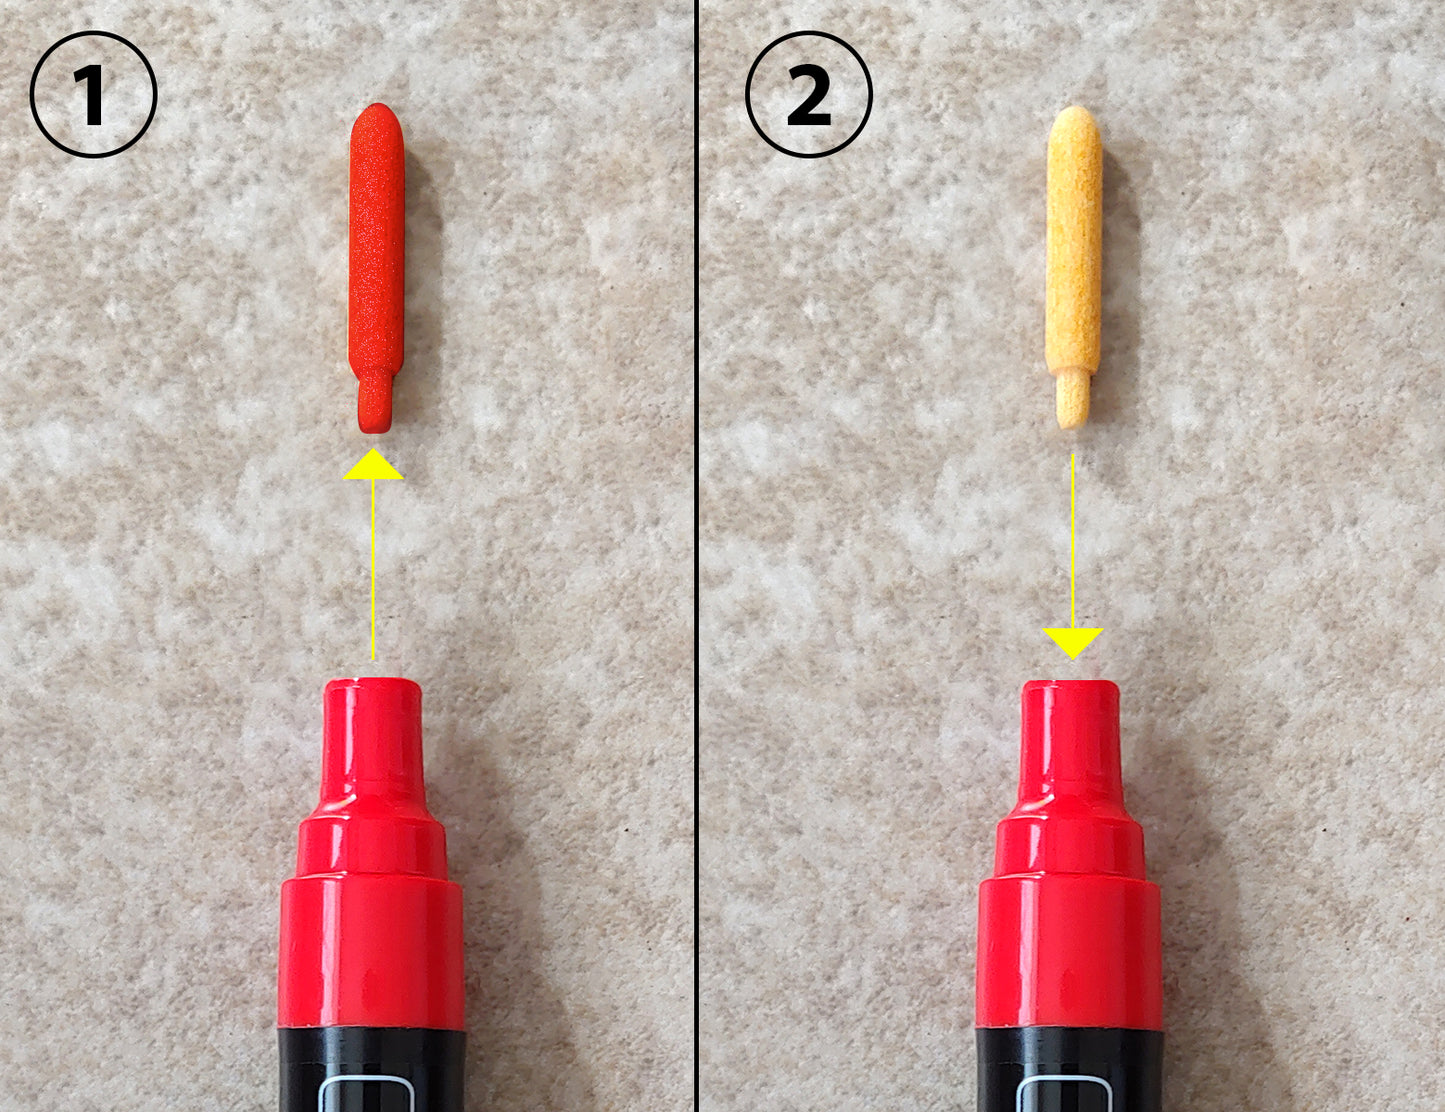 10 Replacement ROUND Fiber Nibs For Tooli-Art Medium Paint Pens - 3.0MM